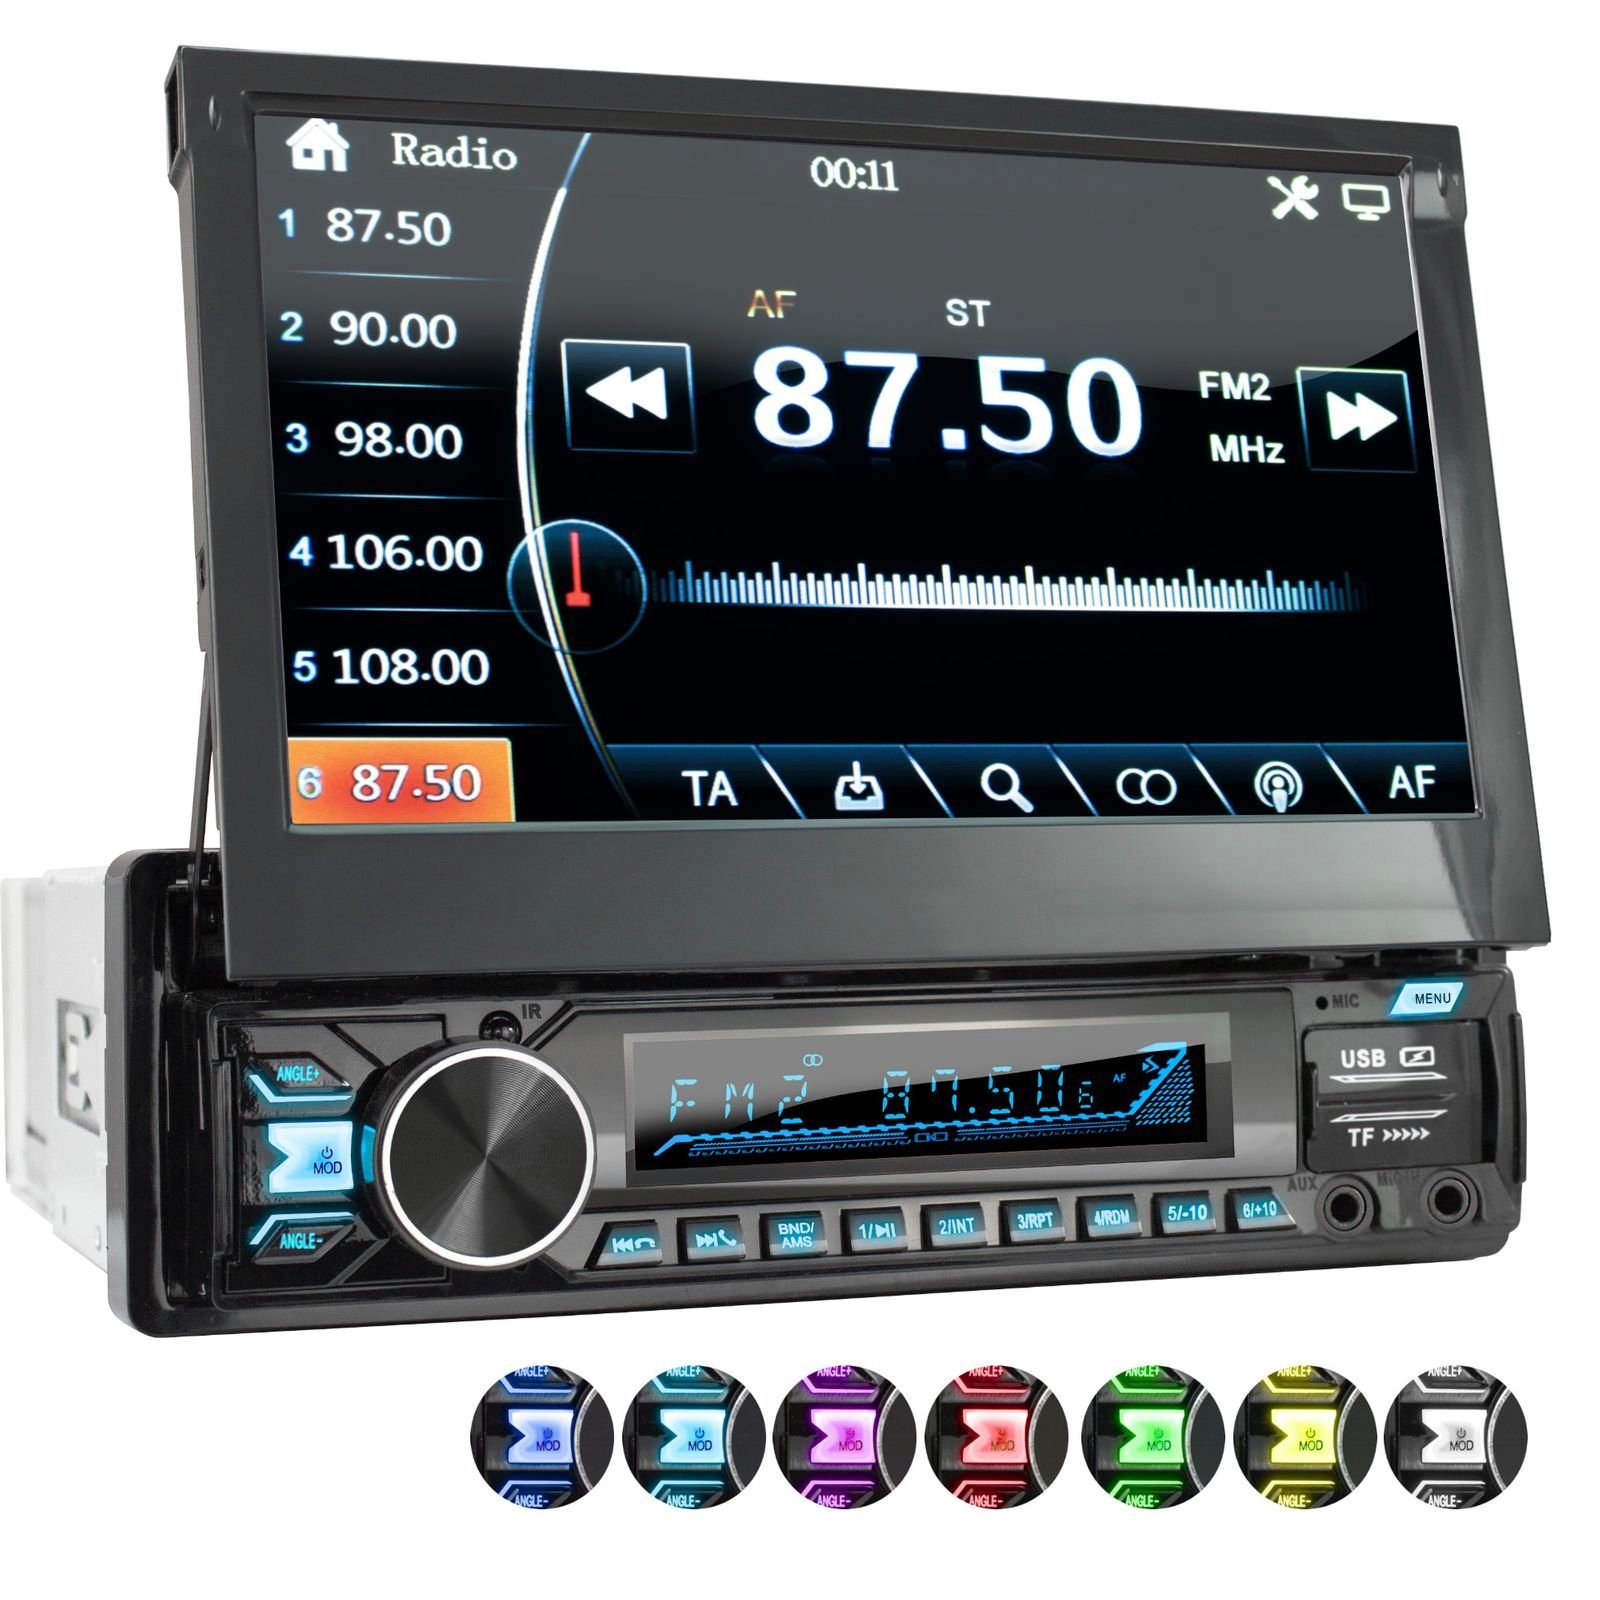 XOMAX Autoradio (XOMAX XM-V780 1DIN Autoradio mit SD, USB und BLUETOOTH)  online kaufen | OTTO